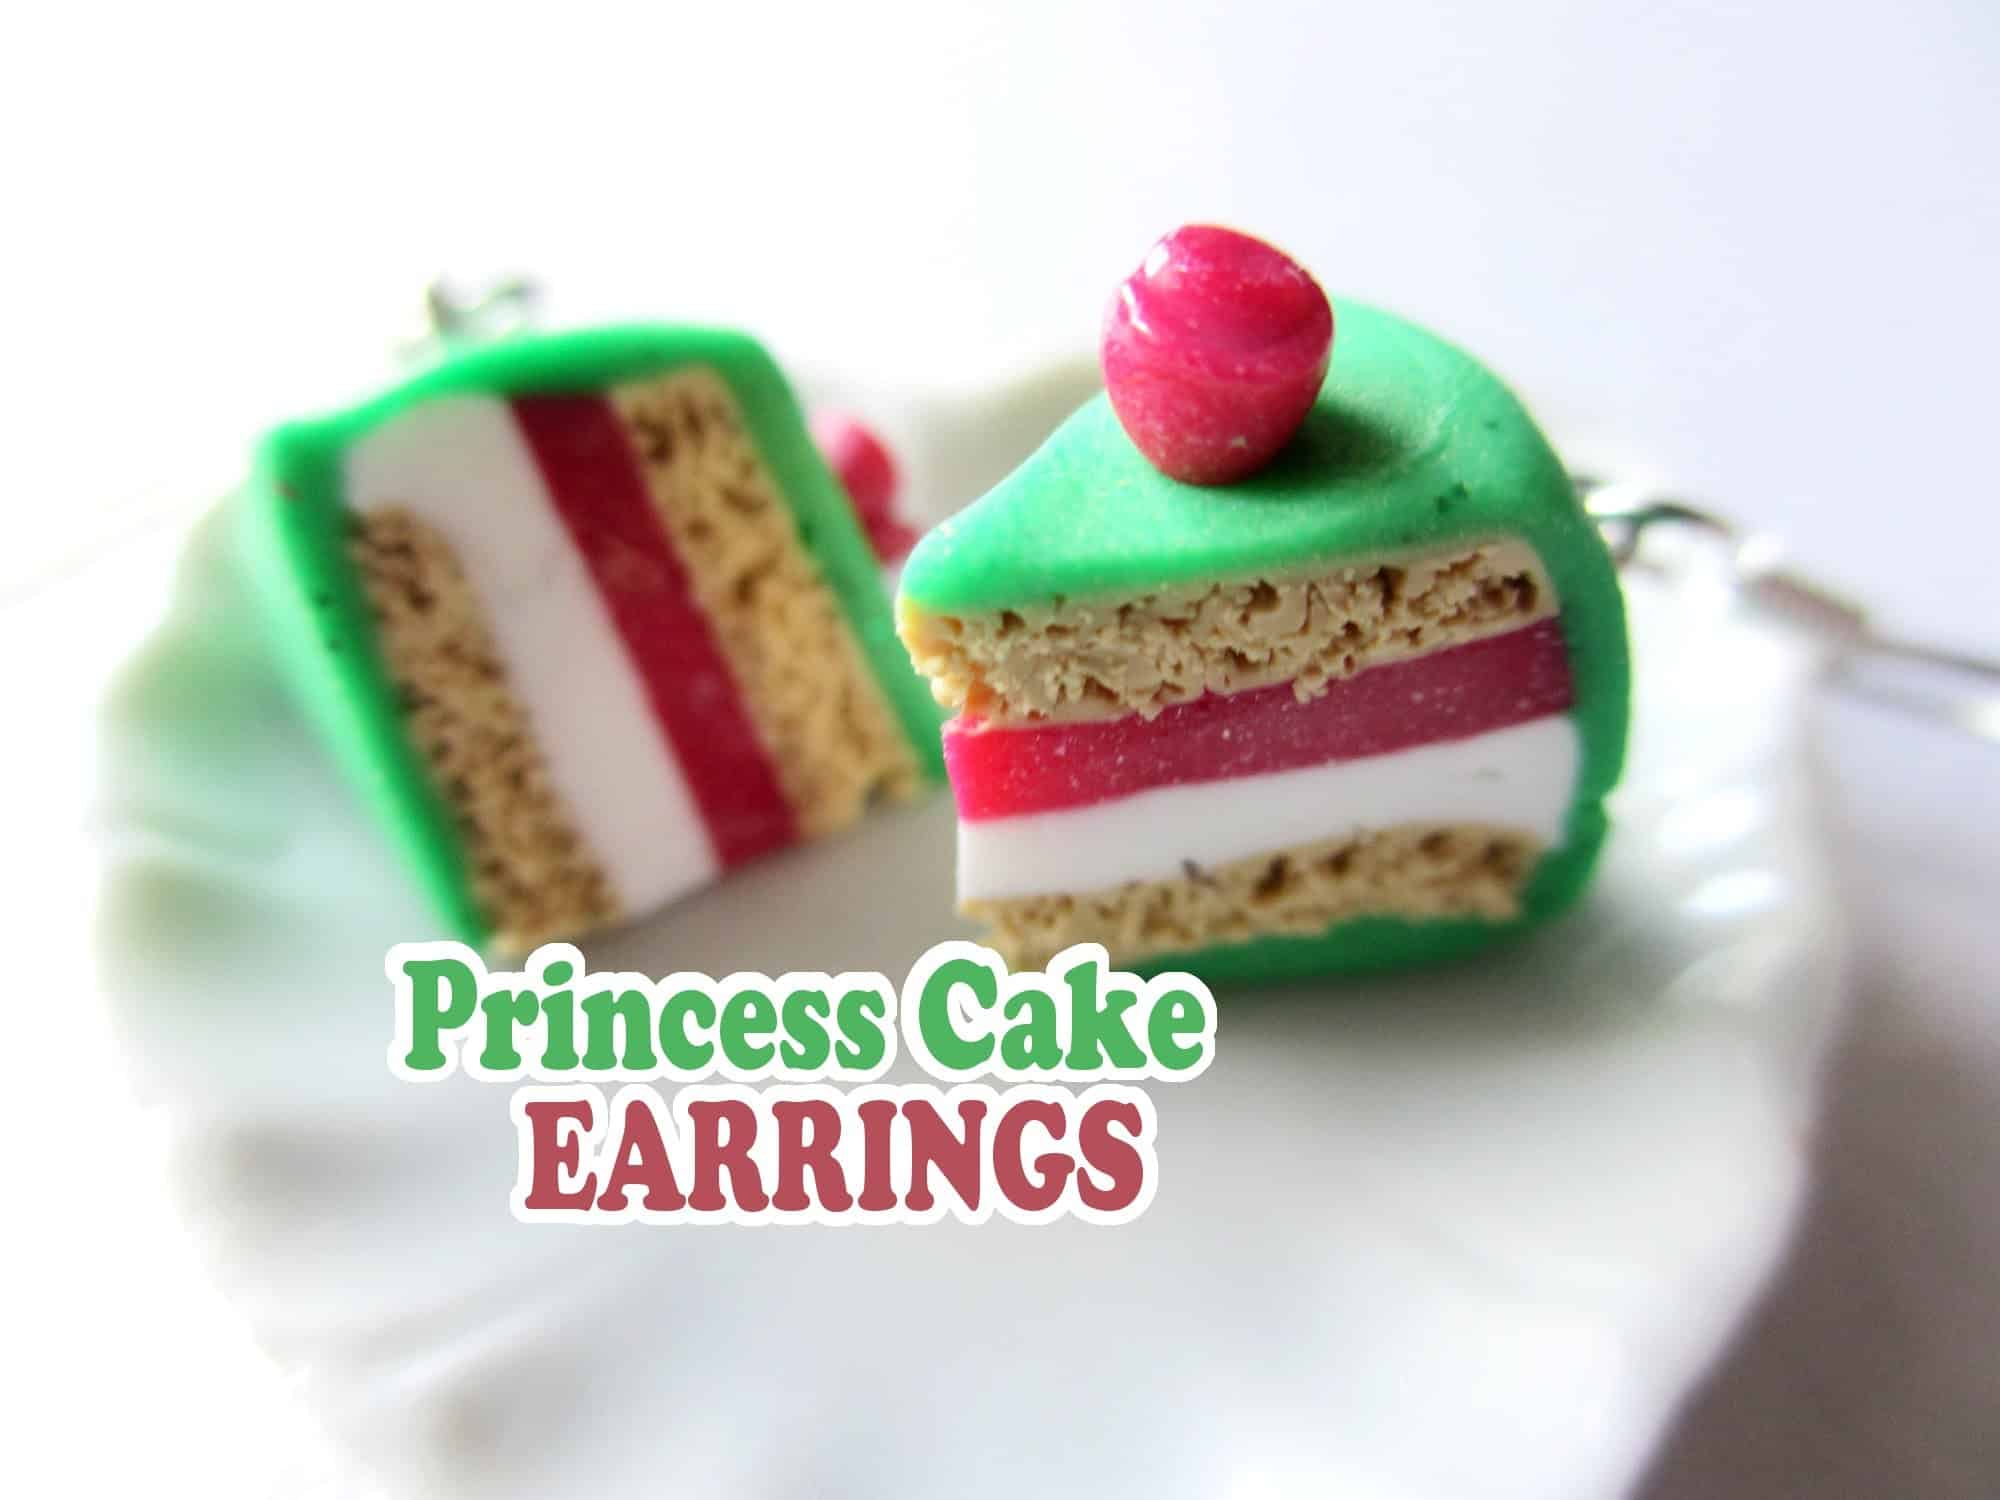 Cake earrings